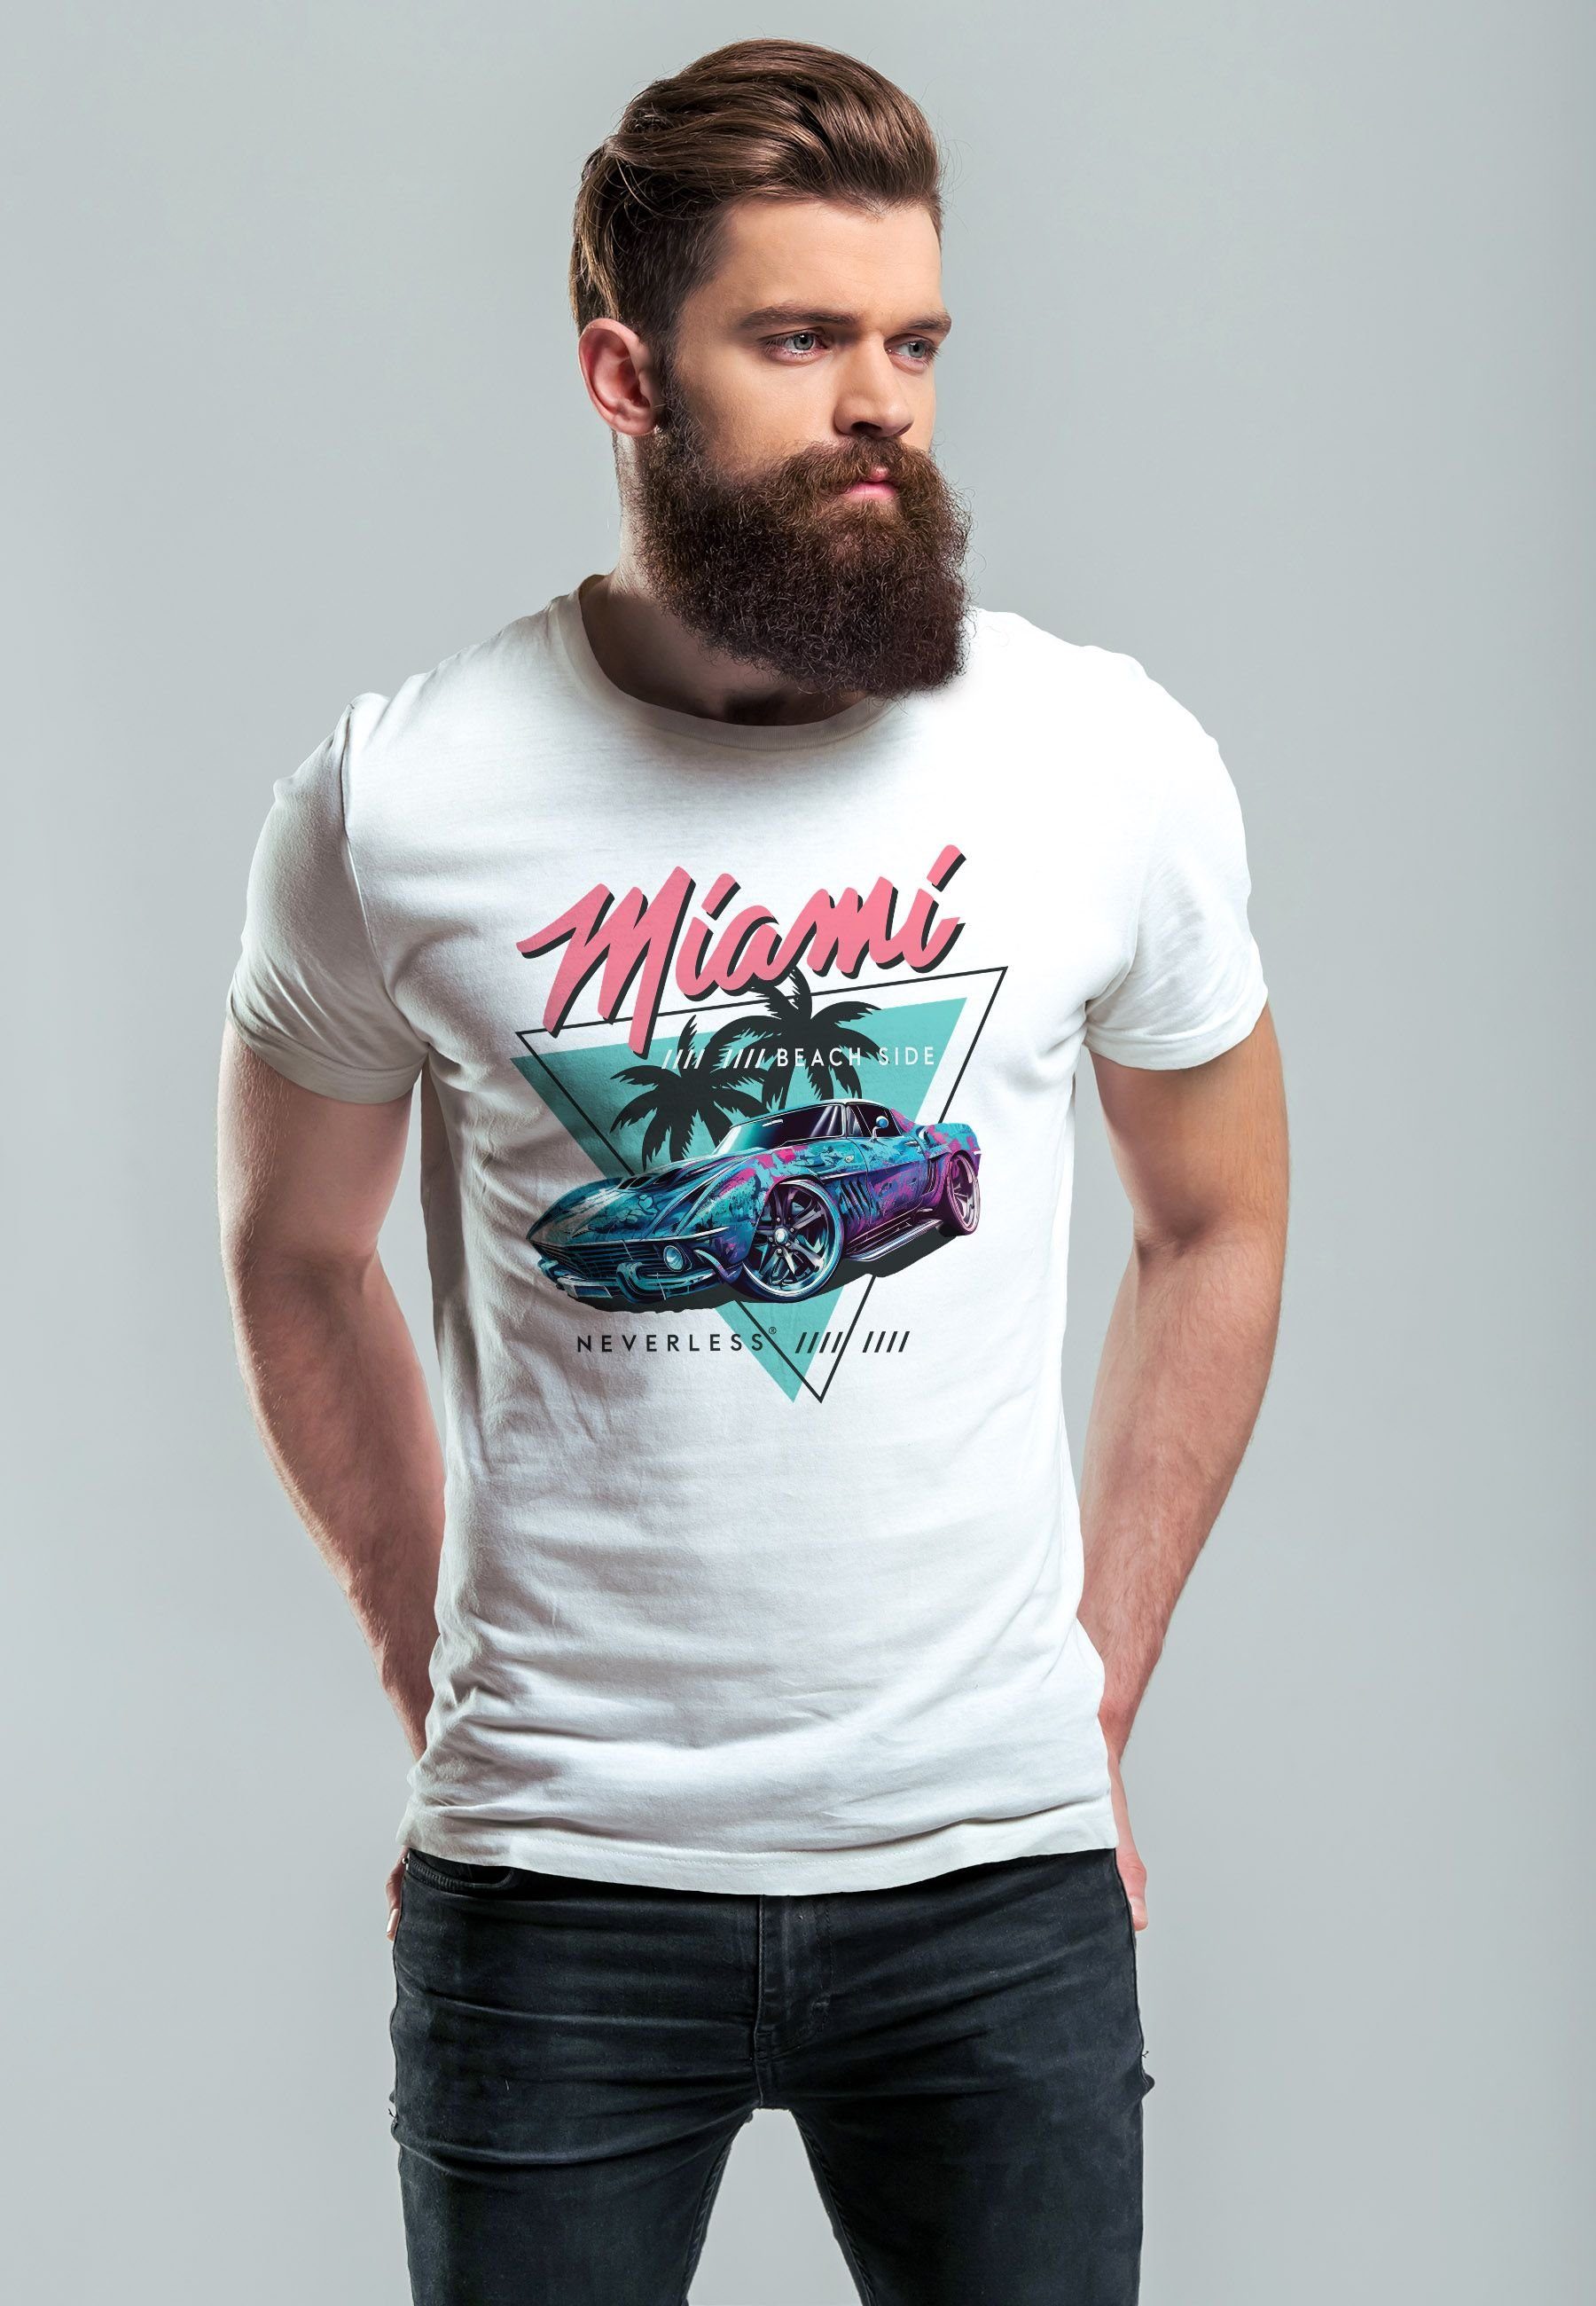 Beach mit T-Shirt Herren Surfing Print weiß Retro USA Neverless Bedruckt Miami Automobil Motiv Print-Shirt